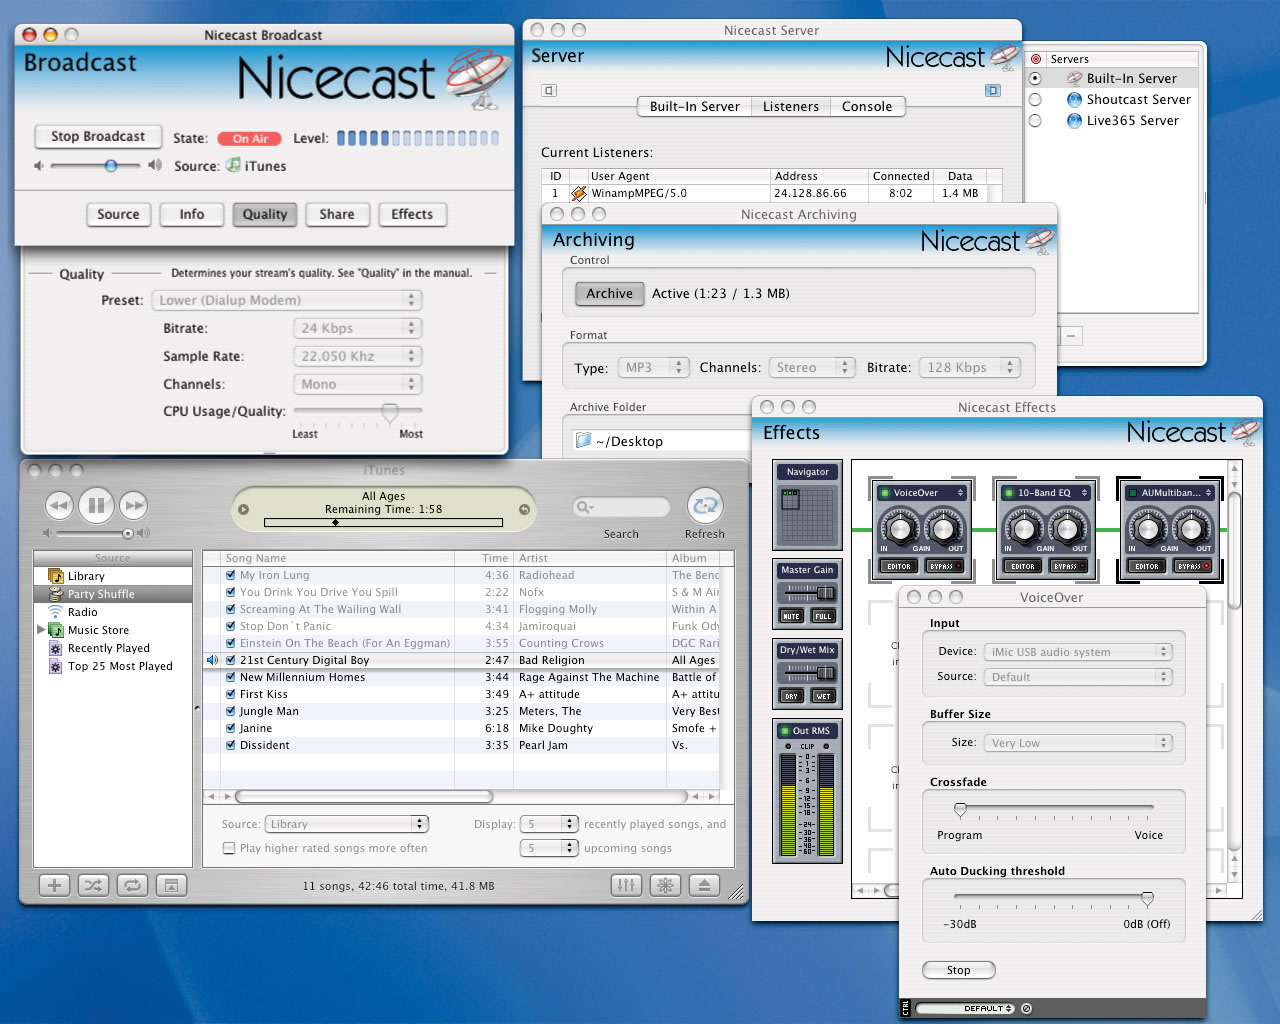 audio hijack pro for mac